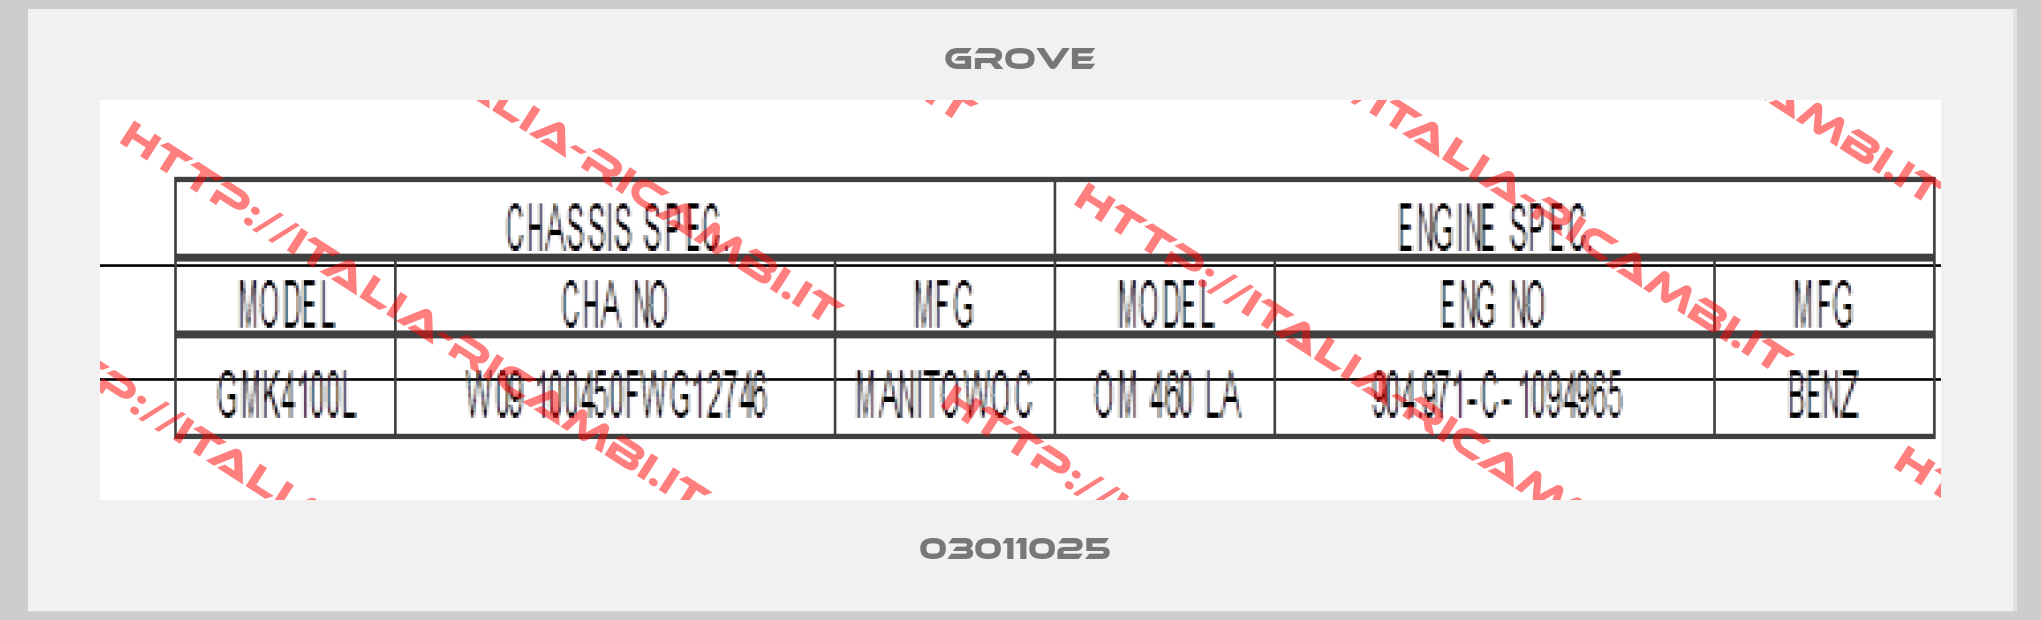 Grove-03011025 